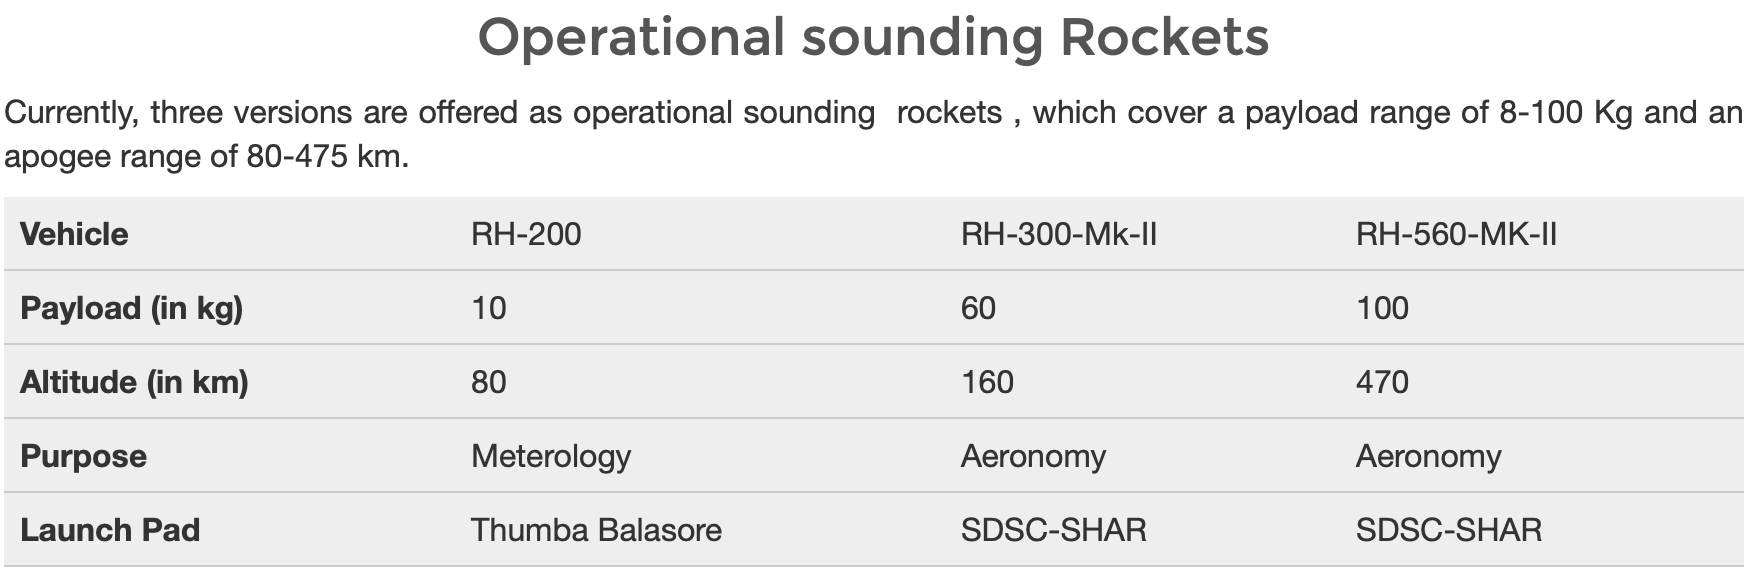 Sounding rockets